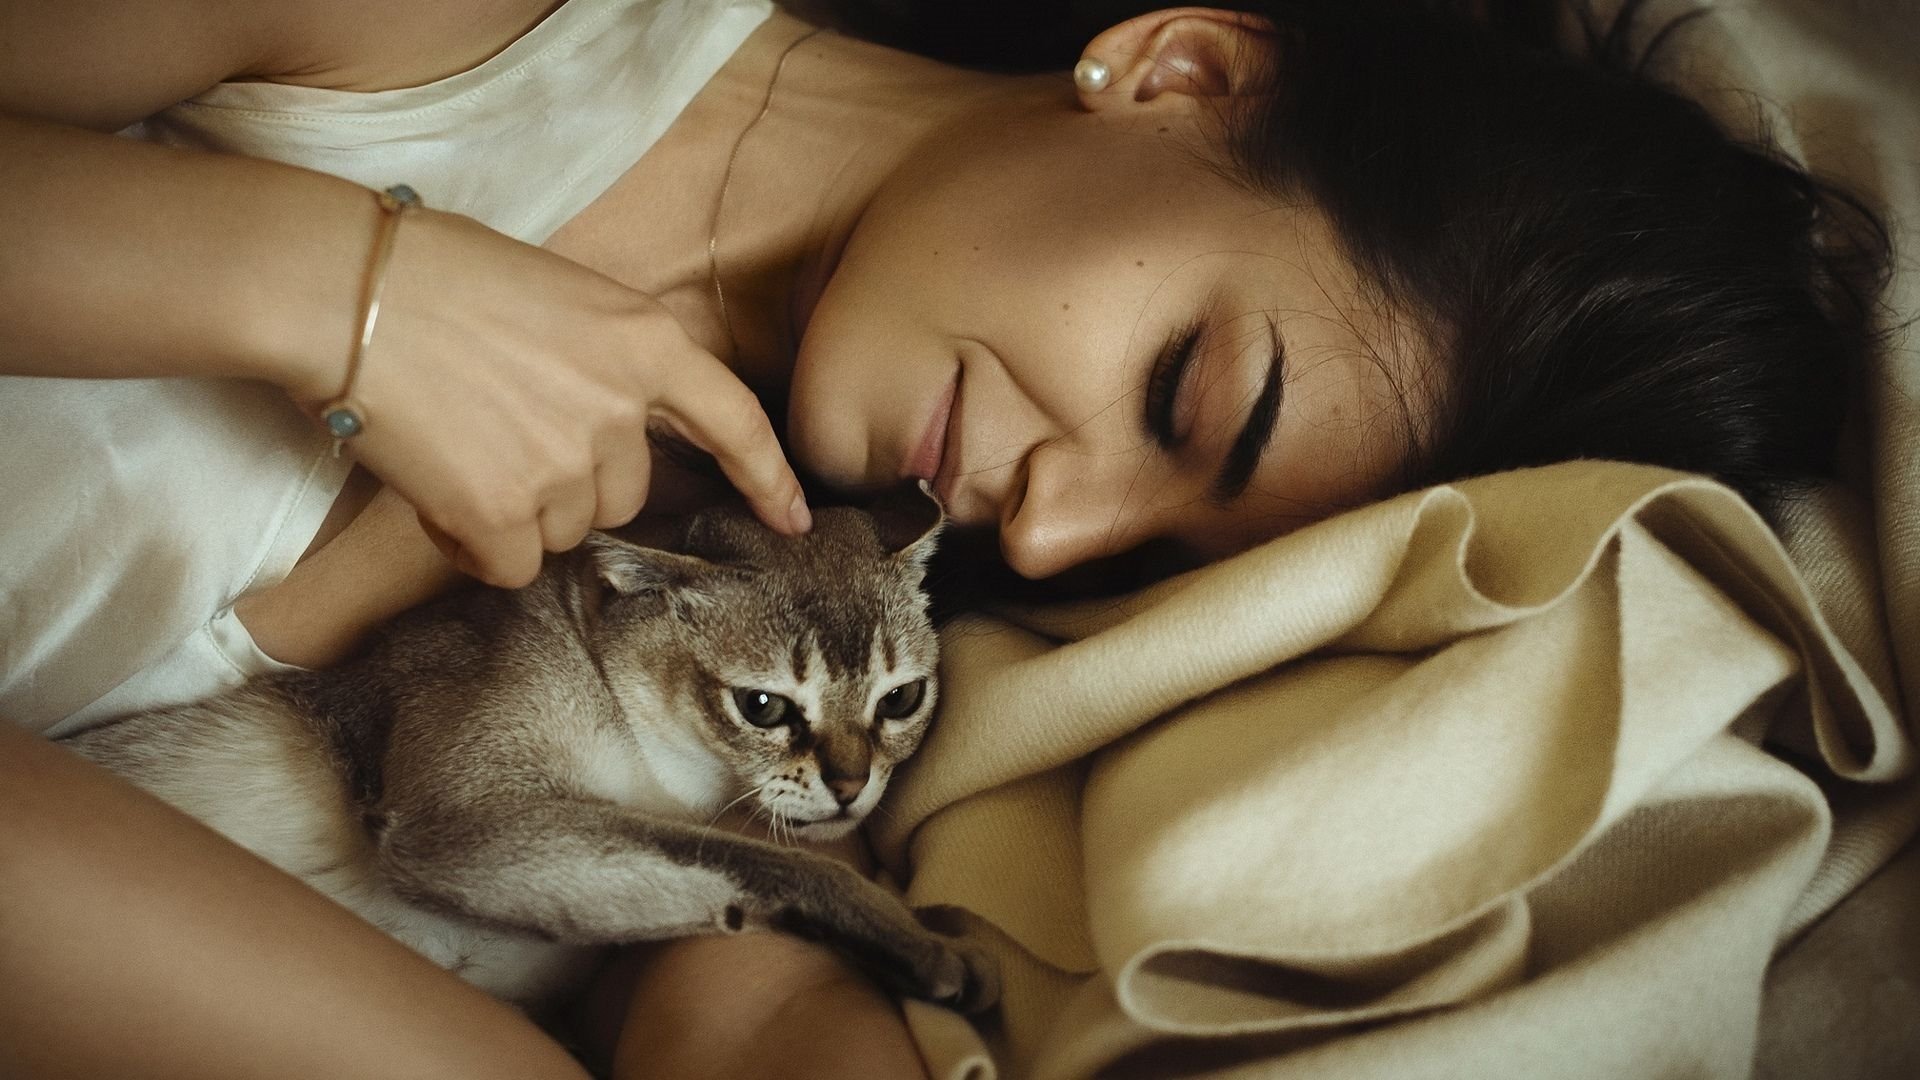 Картинка девушка с кошкой. Девушка с котом. Женщина с кошкой. Красивая девушка с кошкой. Фотосессия с кошкой.